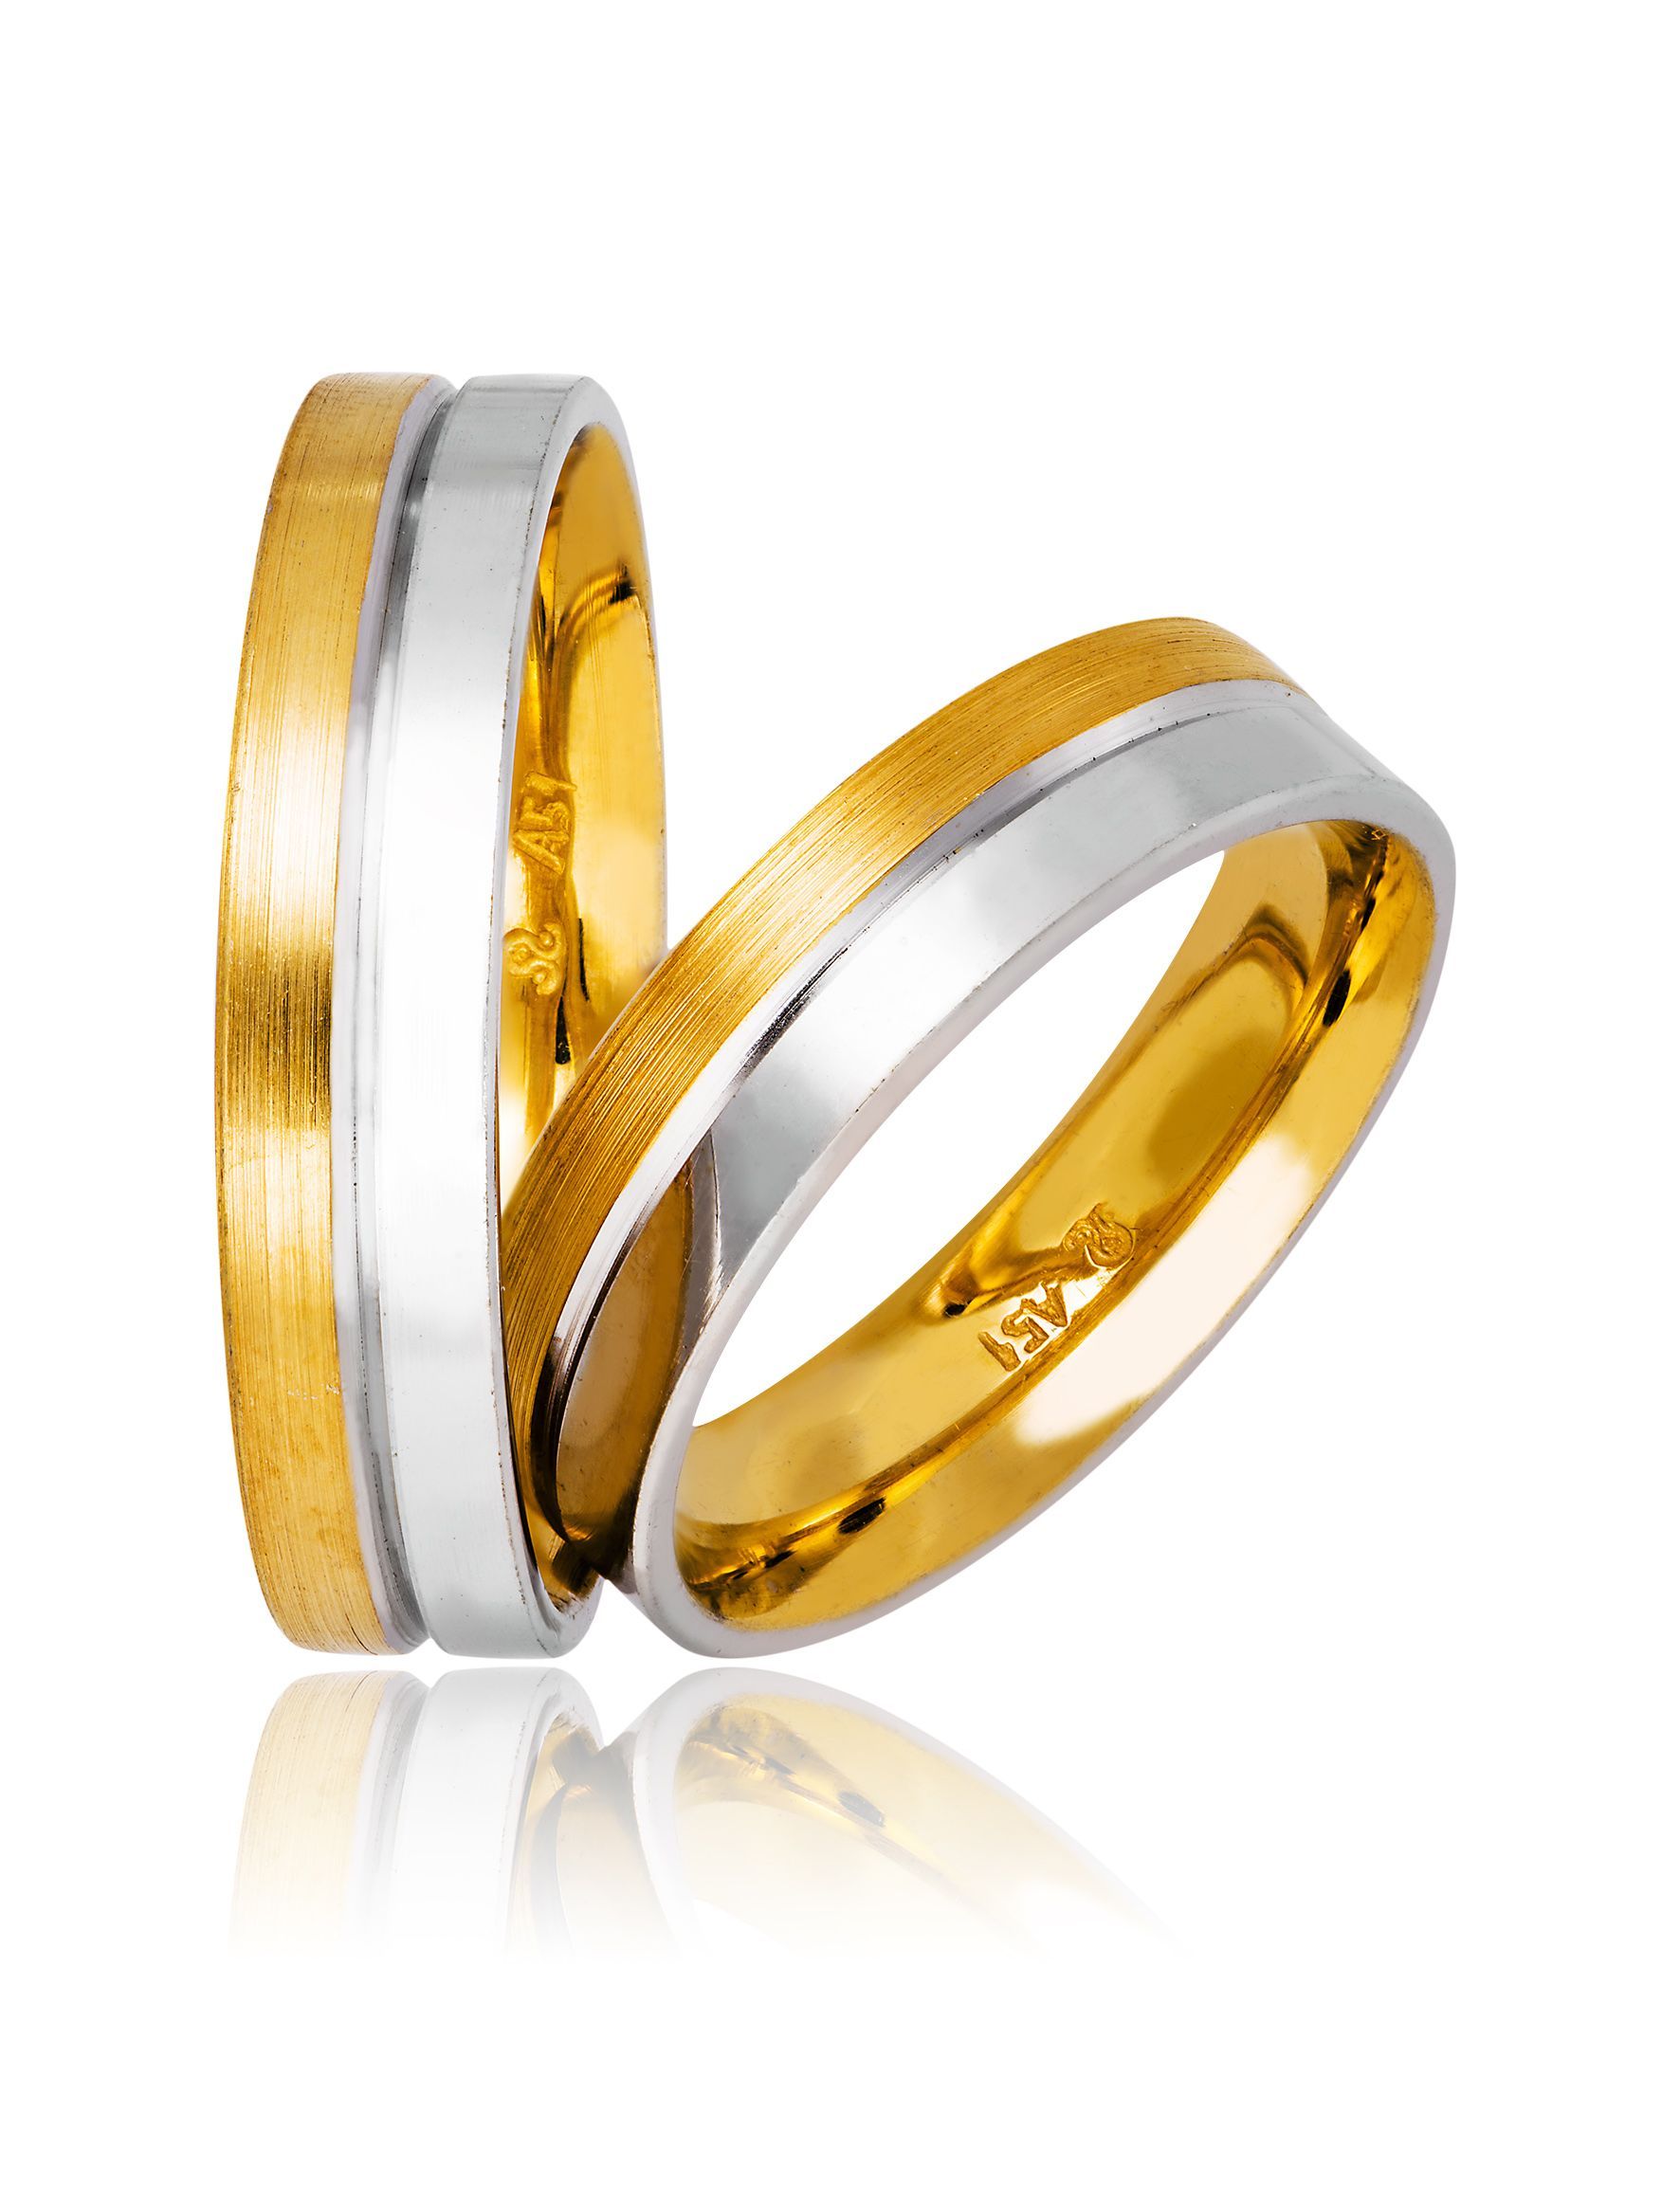 White gold & gold wedding rings 5mm (code 740)